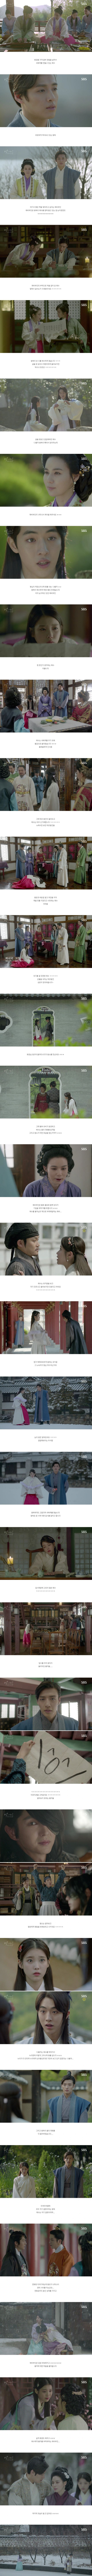 episode 5 captures for the Korean drama 'Scarlet Heart: Ryeo'